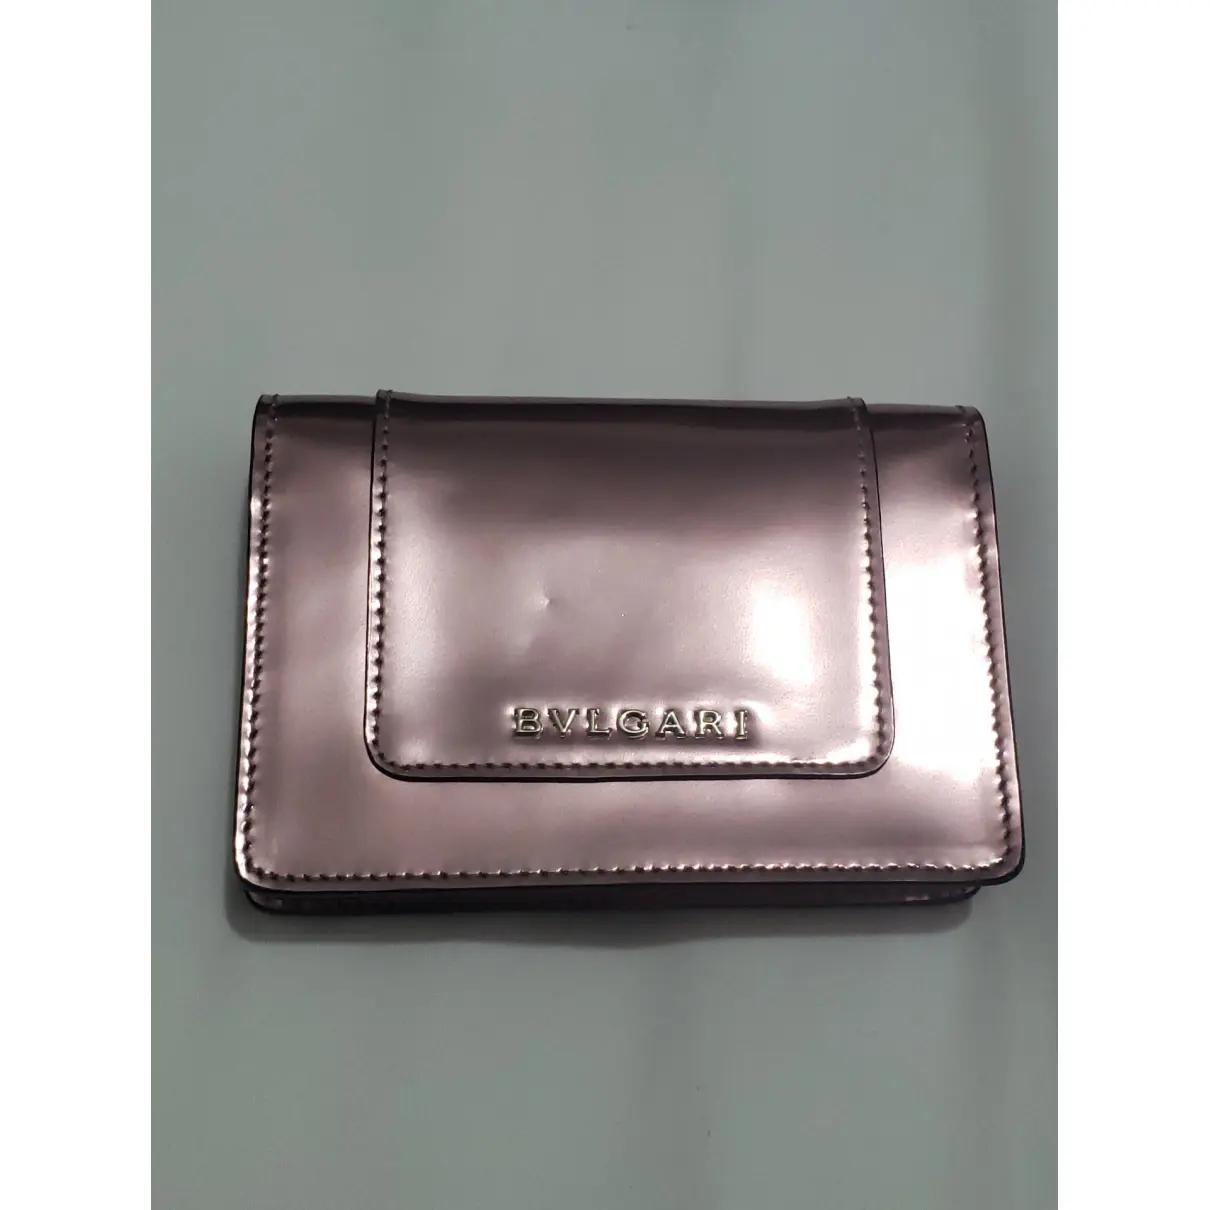 Buy Bvlgari Serpenti patent leather card wallet online